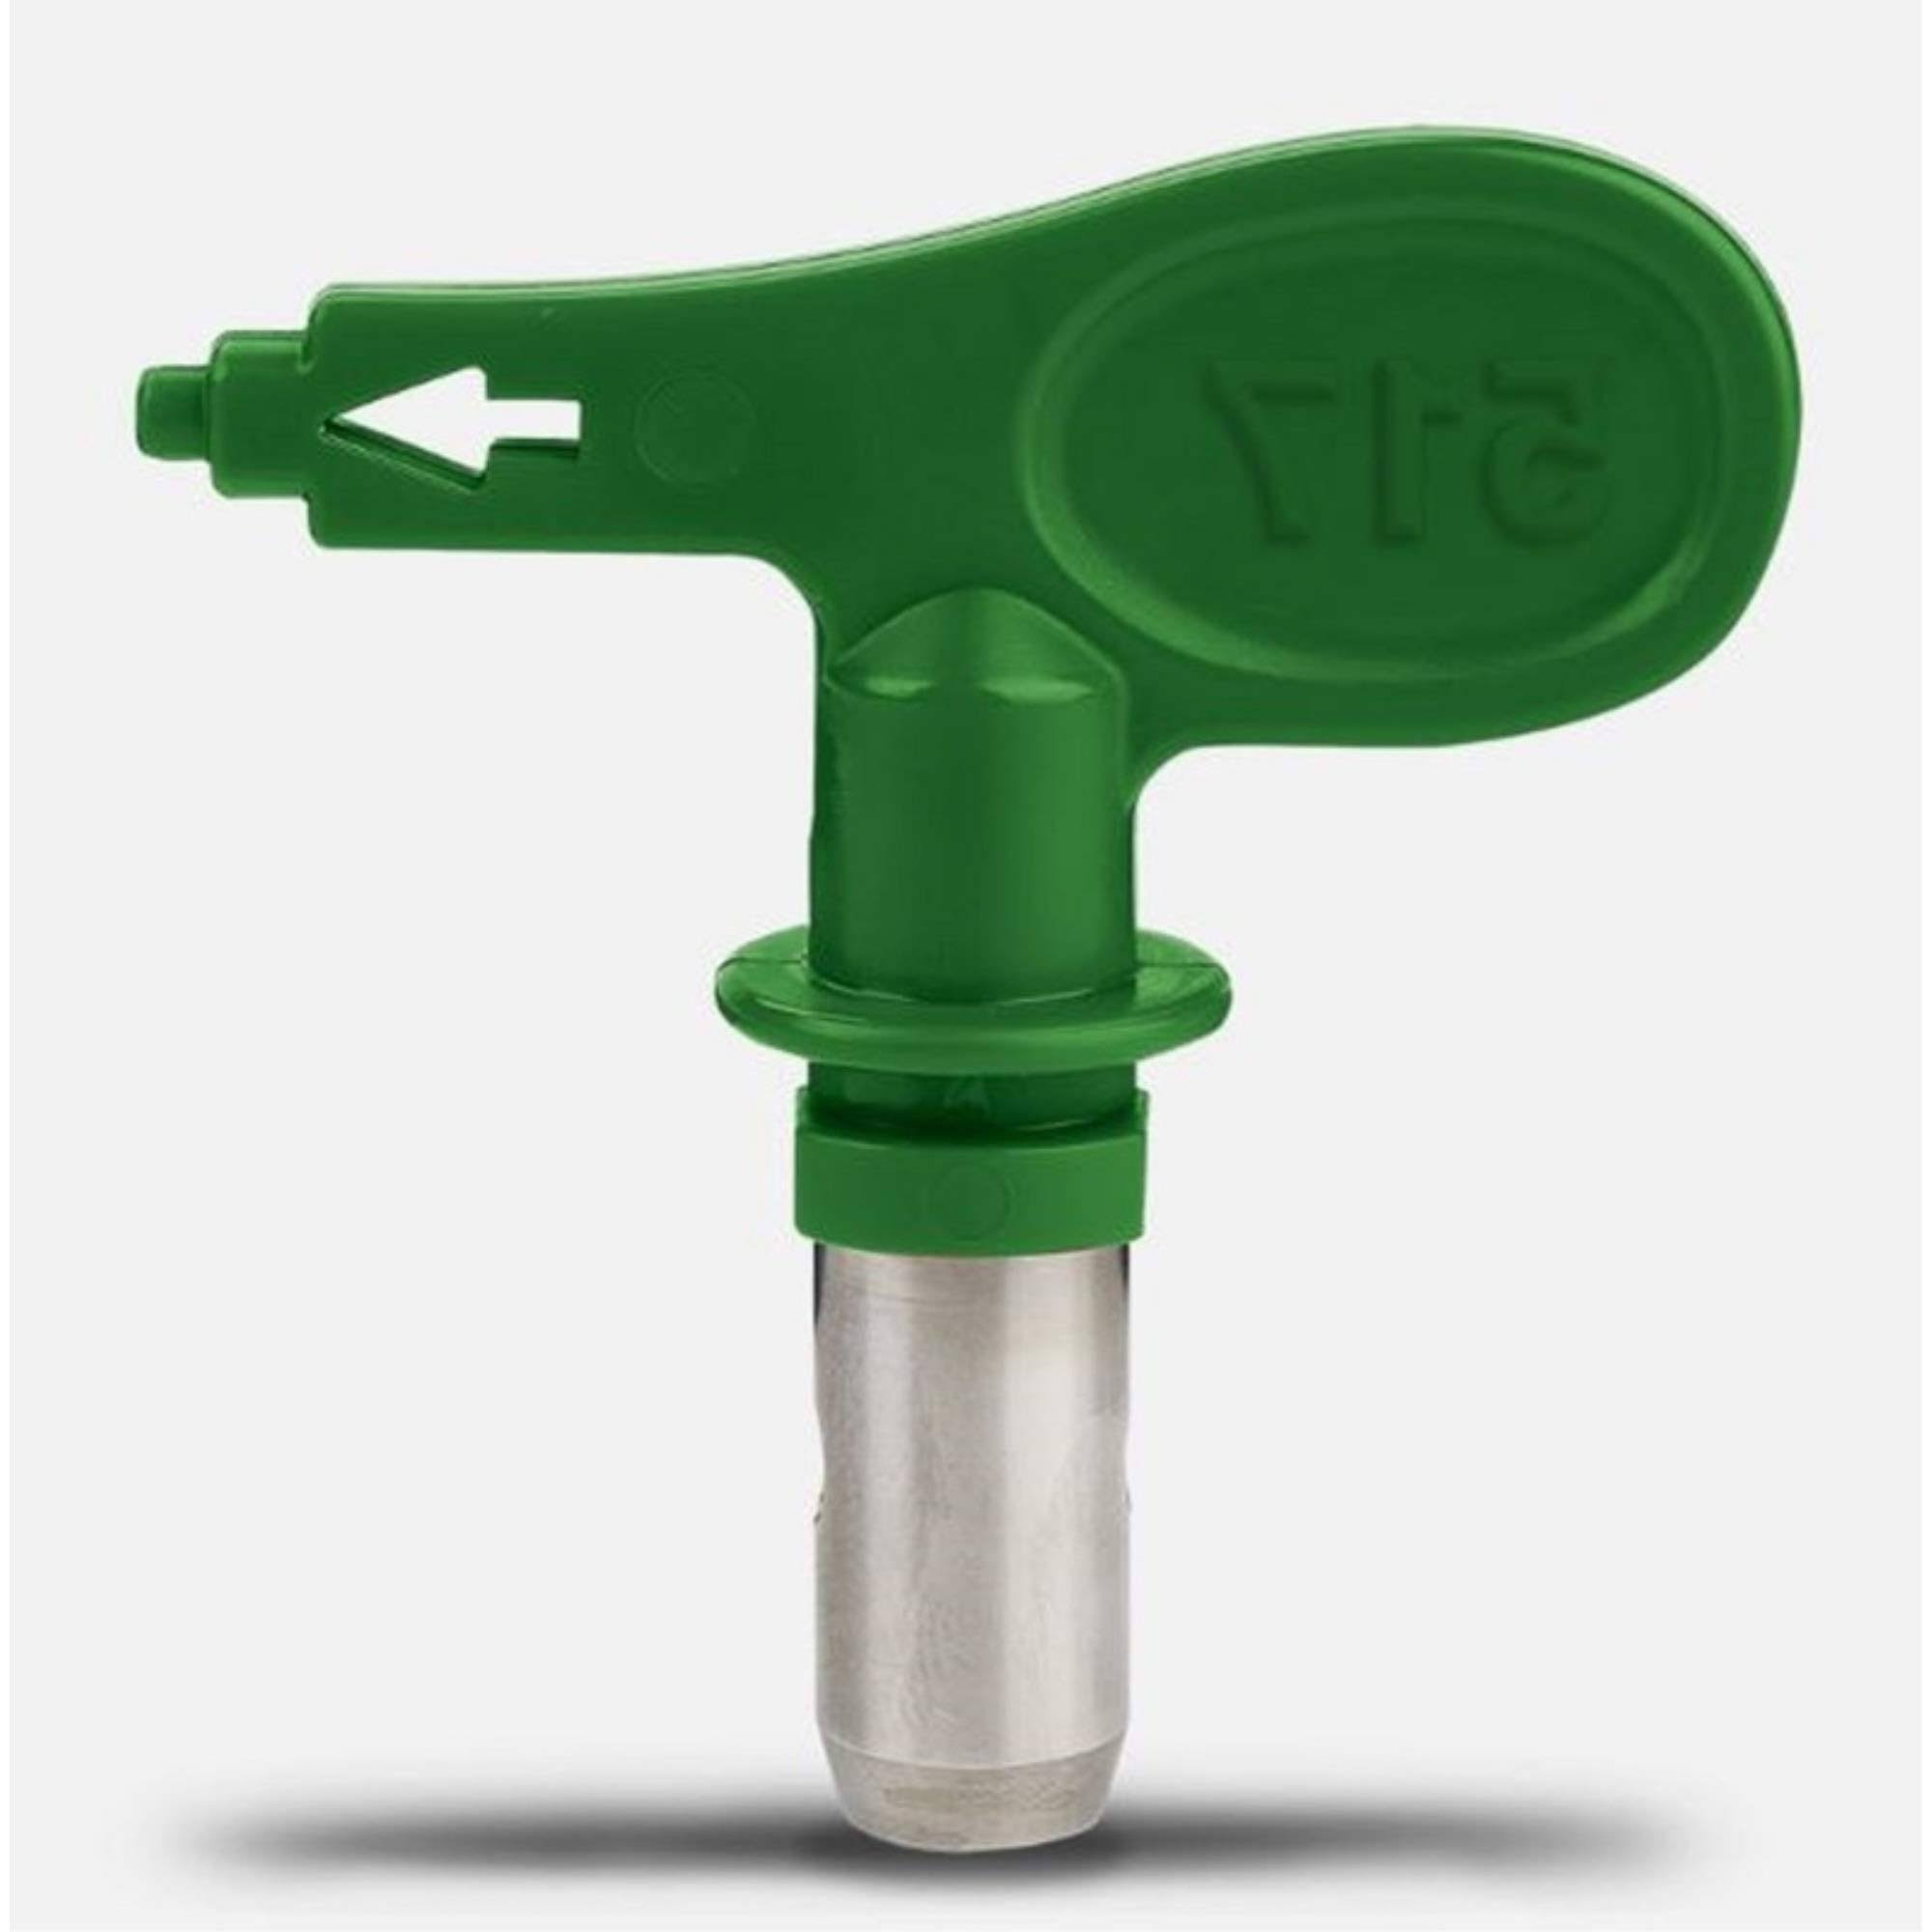 TITAN 330-515 Airless Spray Tip 330 Reversible 1000 psi Green